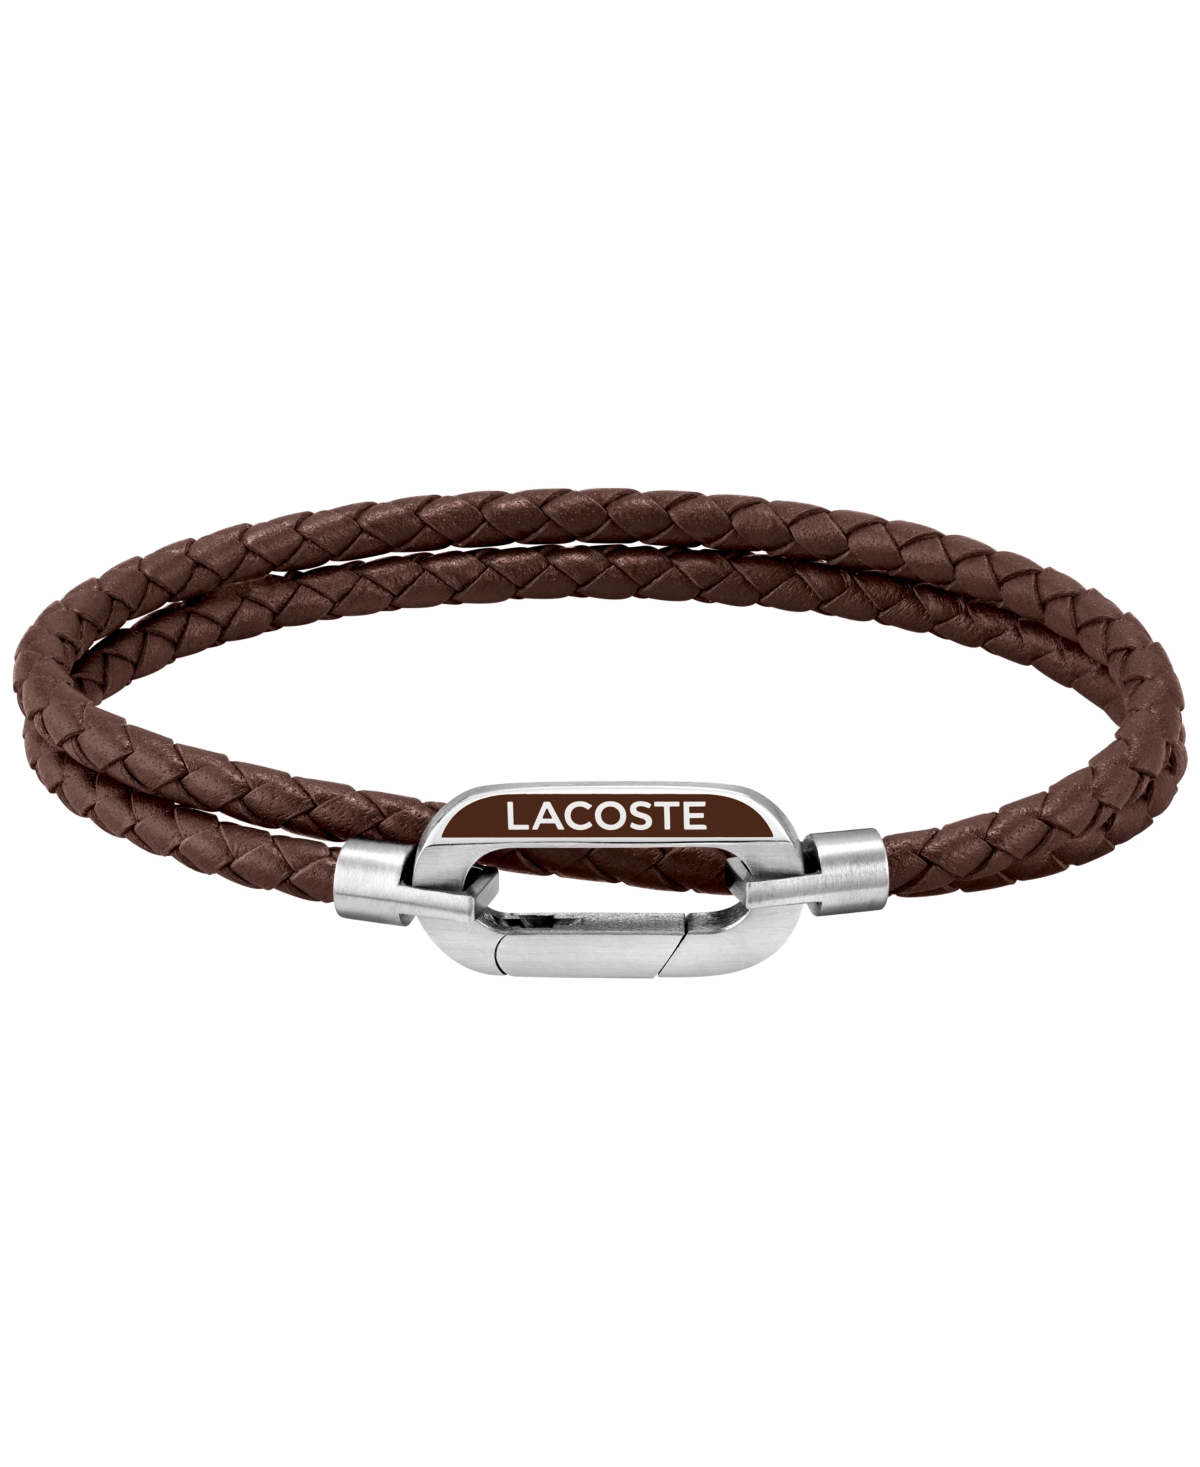 Lacoste Men's Braided Leather Bracelet In Brown